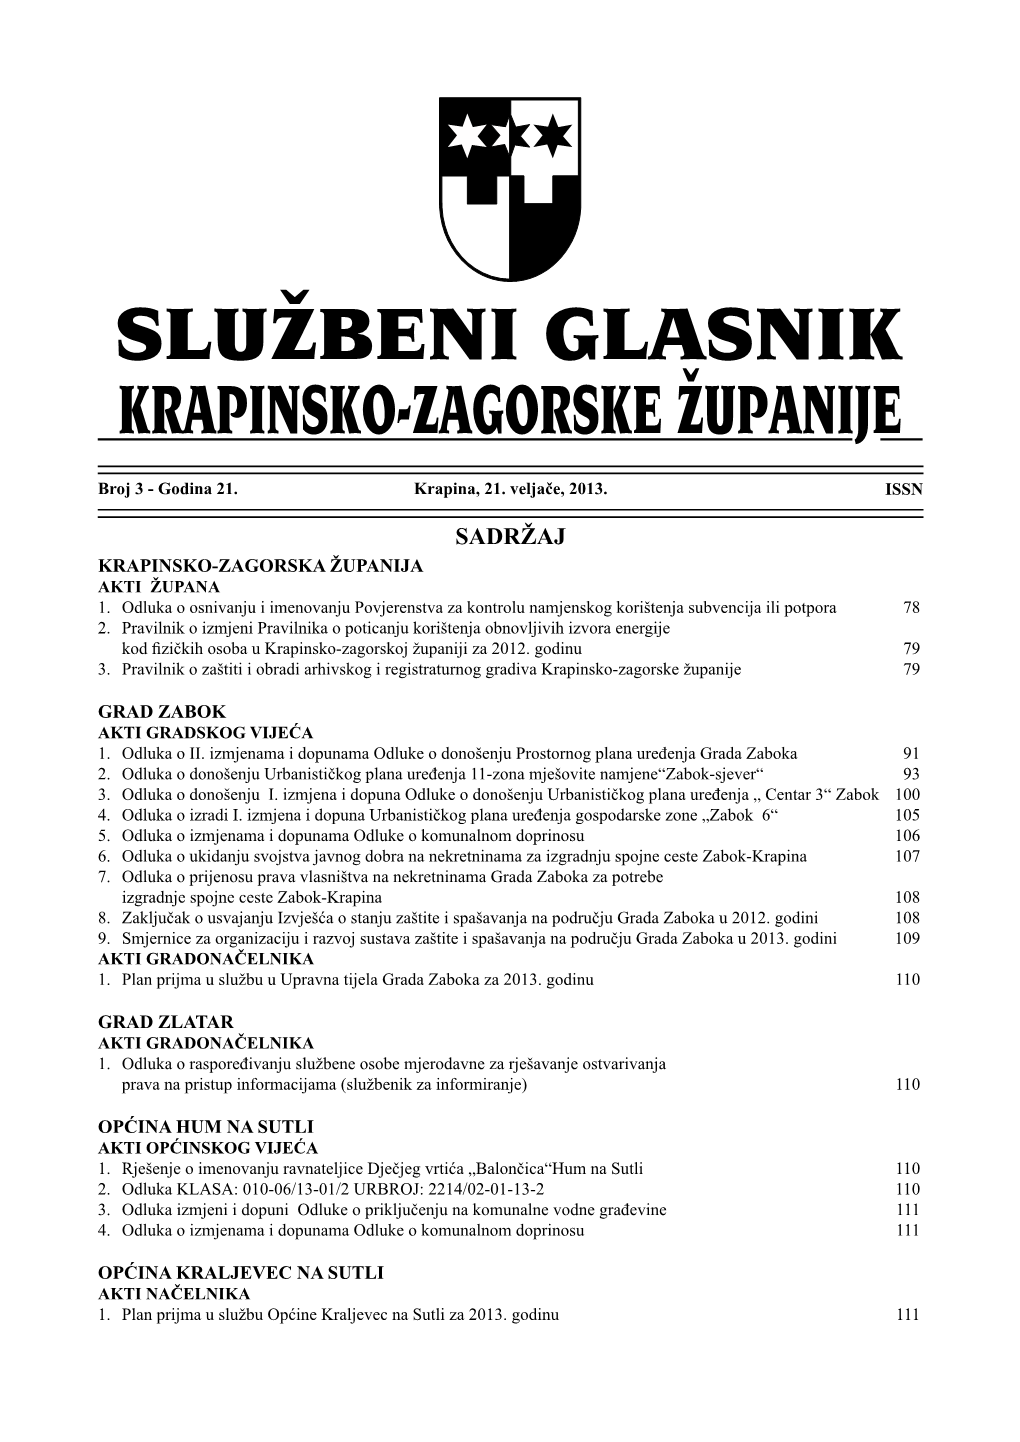 Sadržaj Krapinsko-Zagorska Županija Akti Župana 1